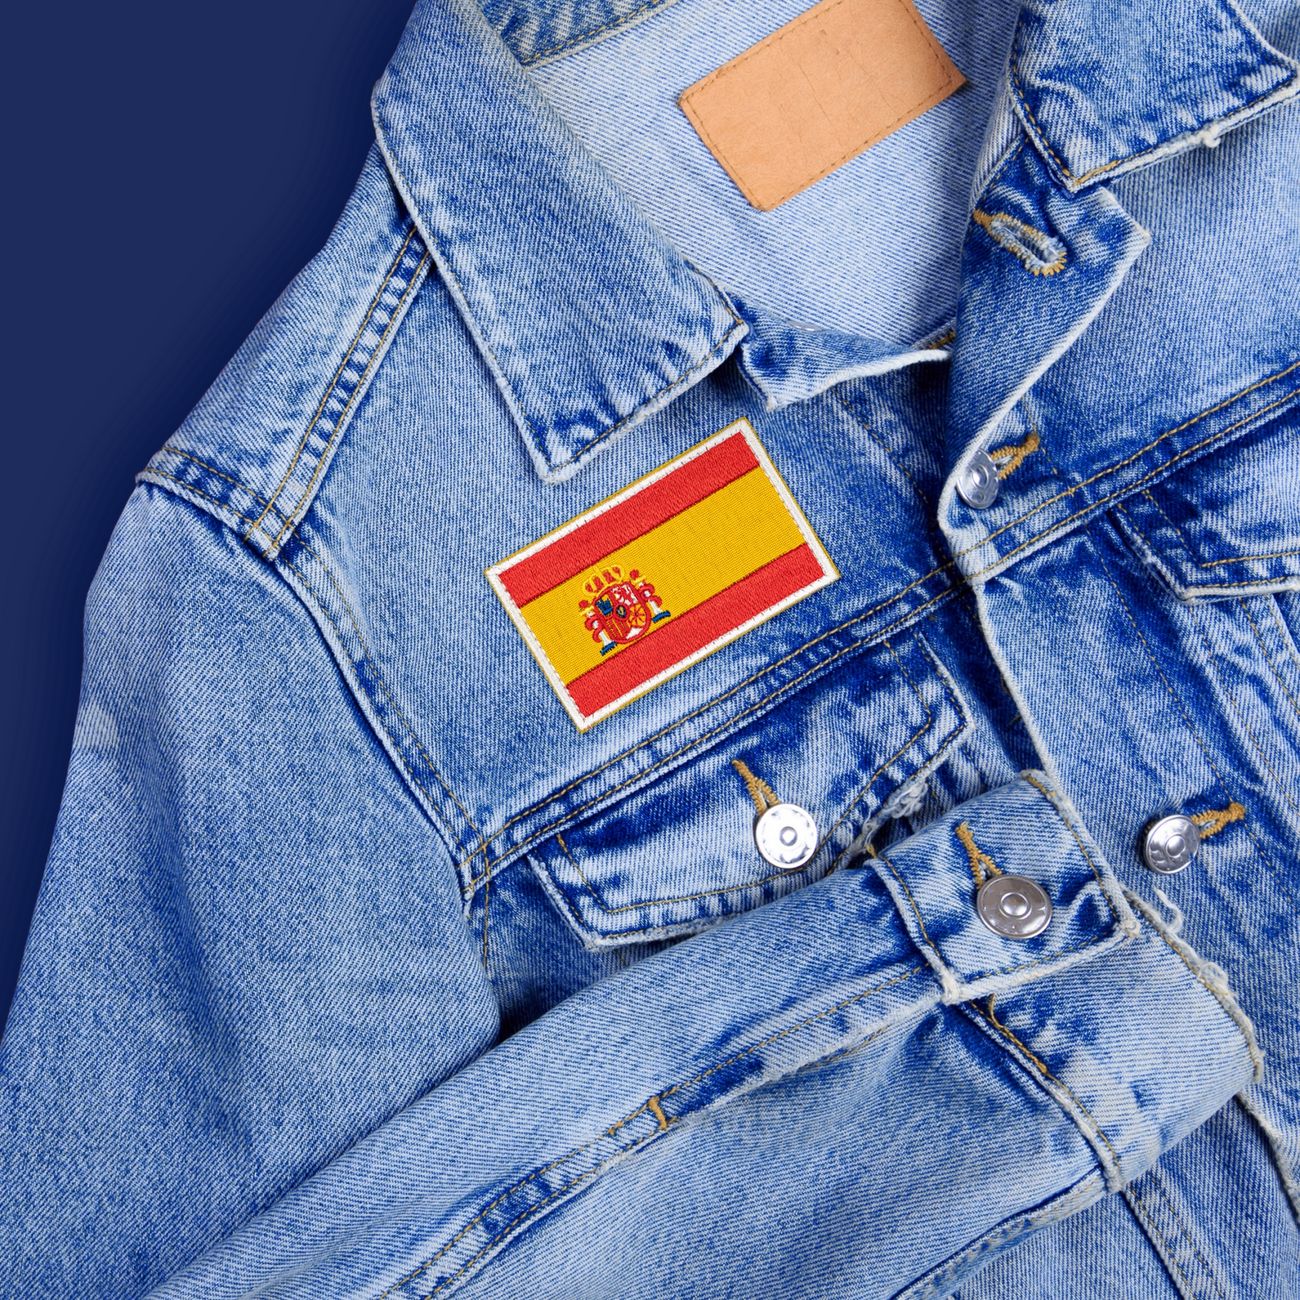 tygmarke-spanska-flaggan-92027-2